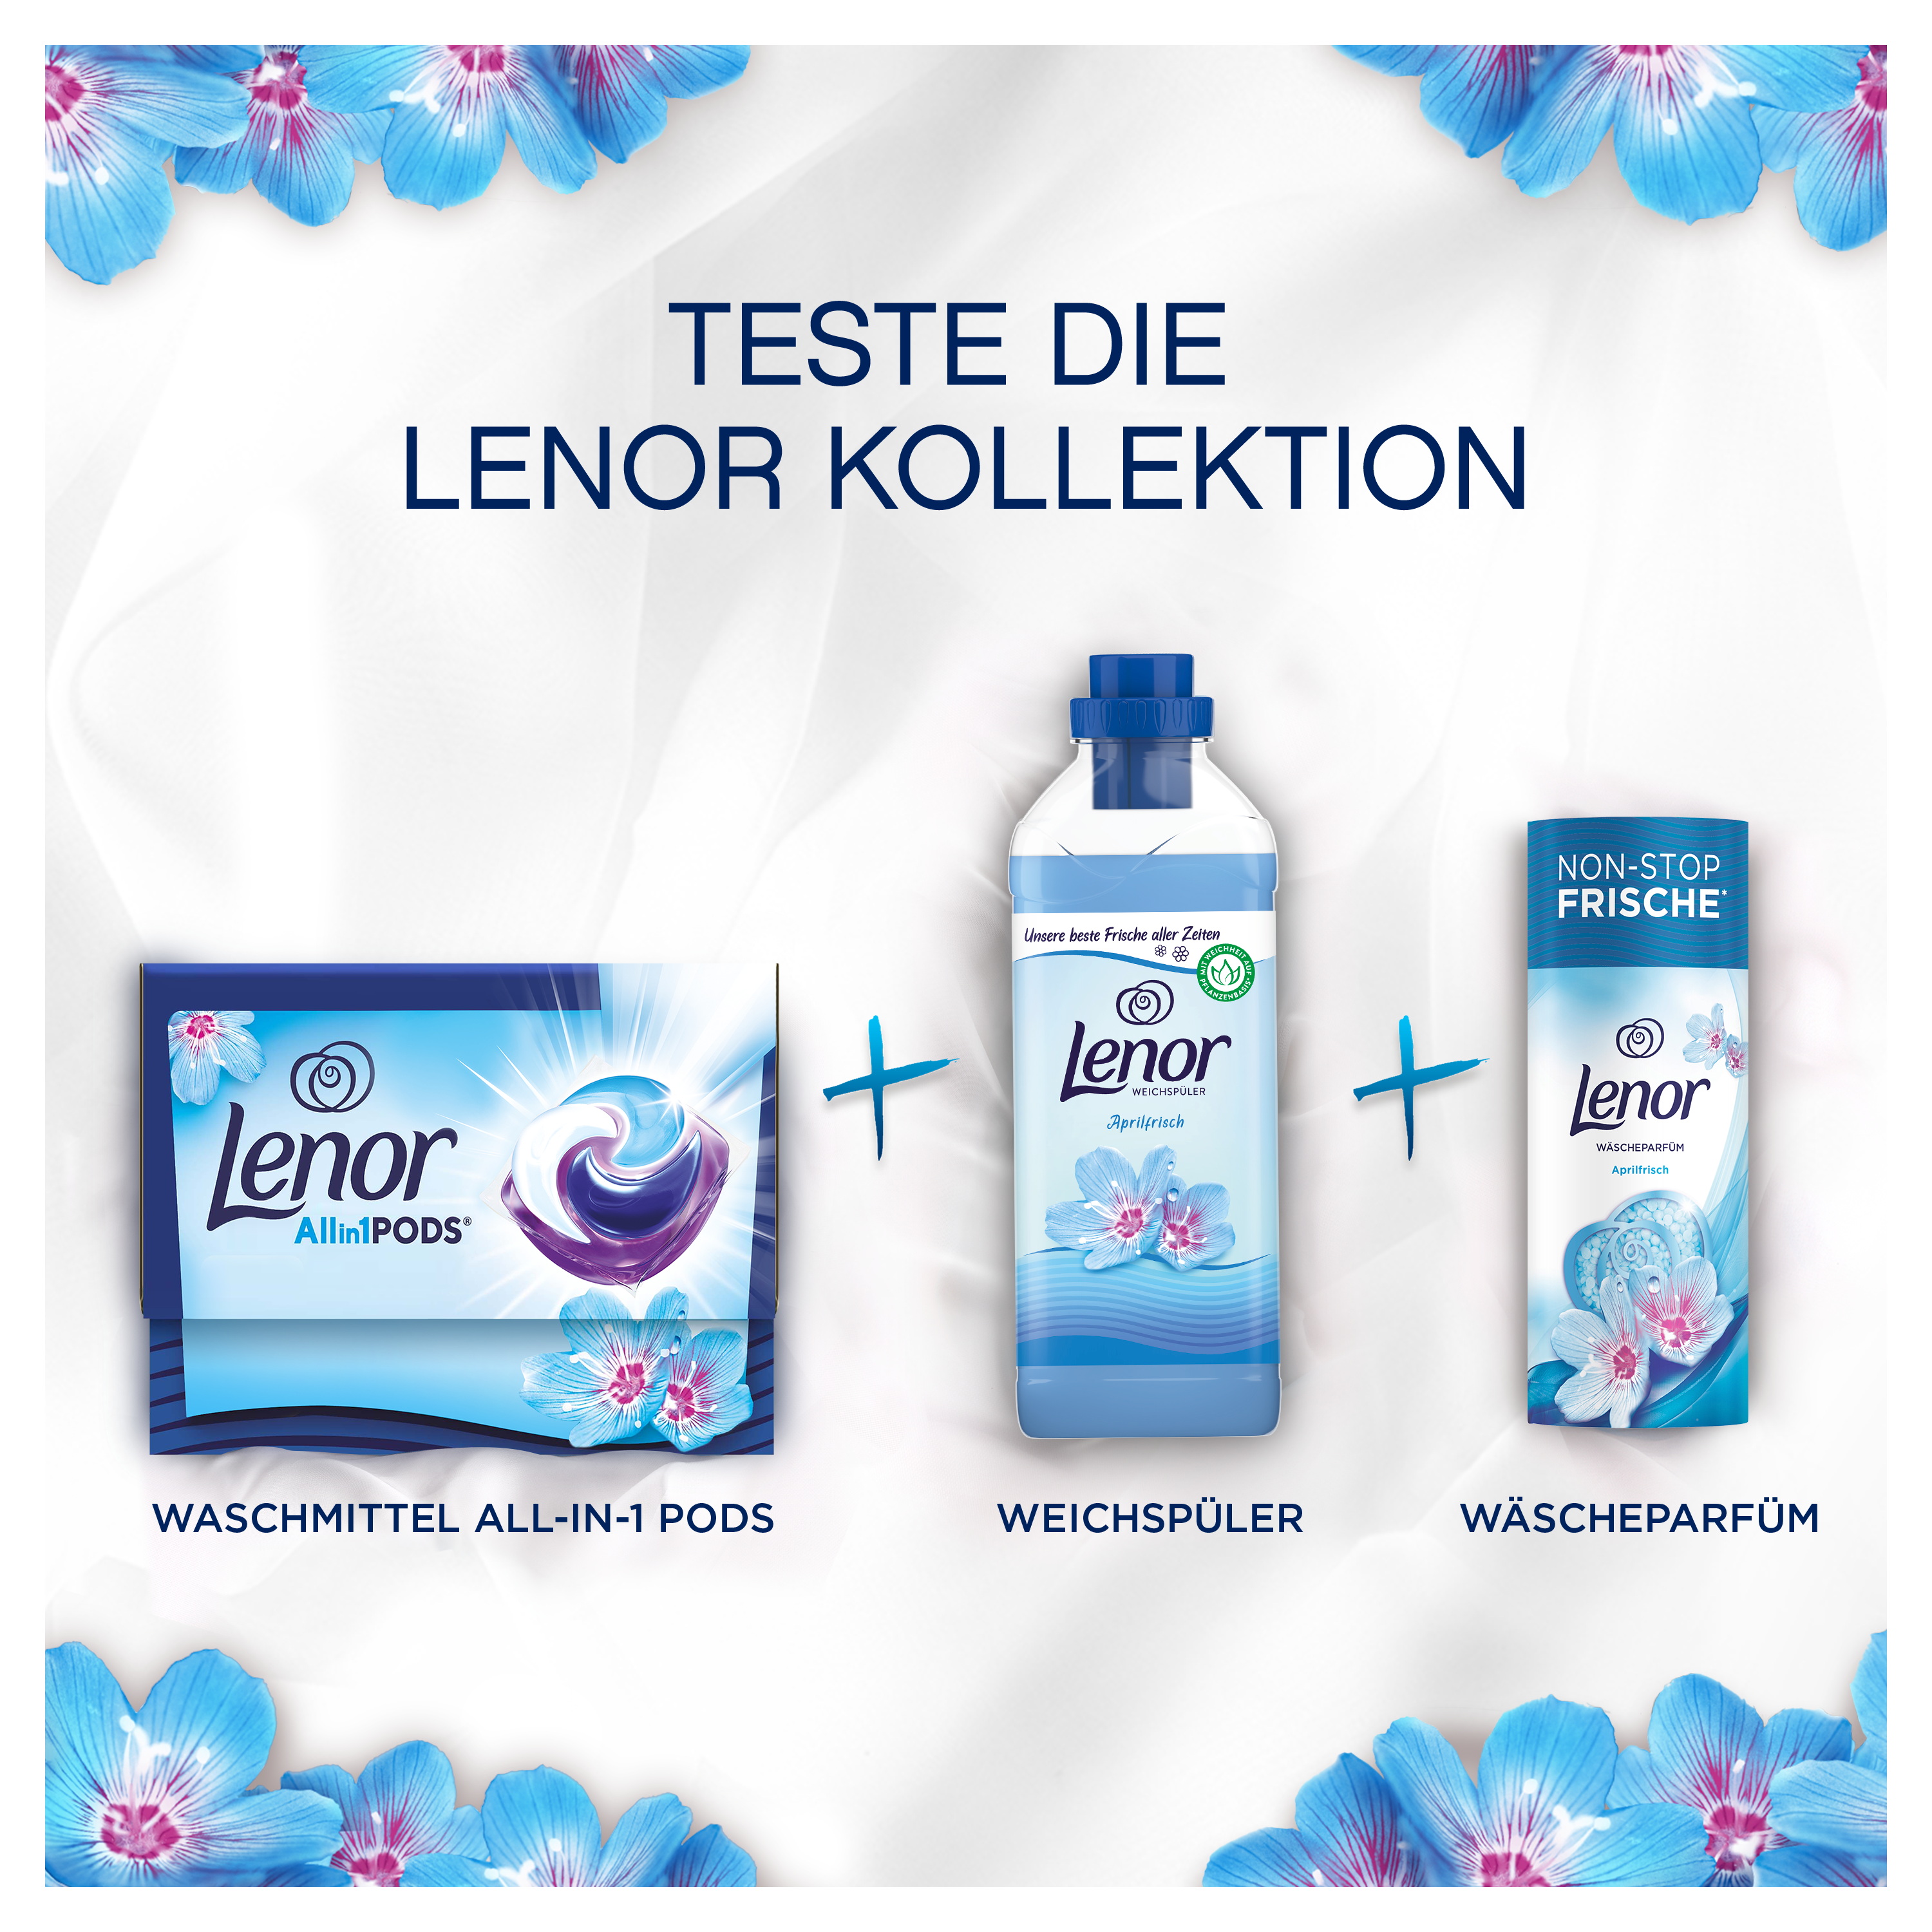 Lenor laundry scent APRIL FRESH - TheEuroStore24